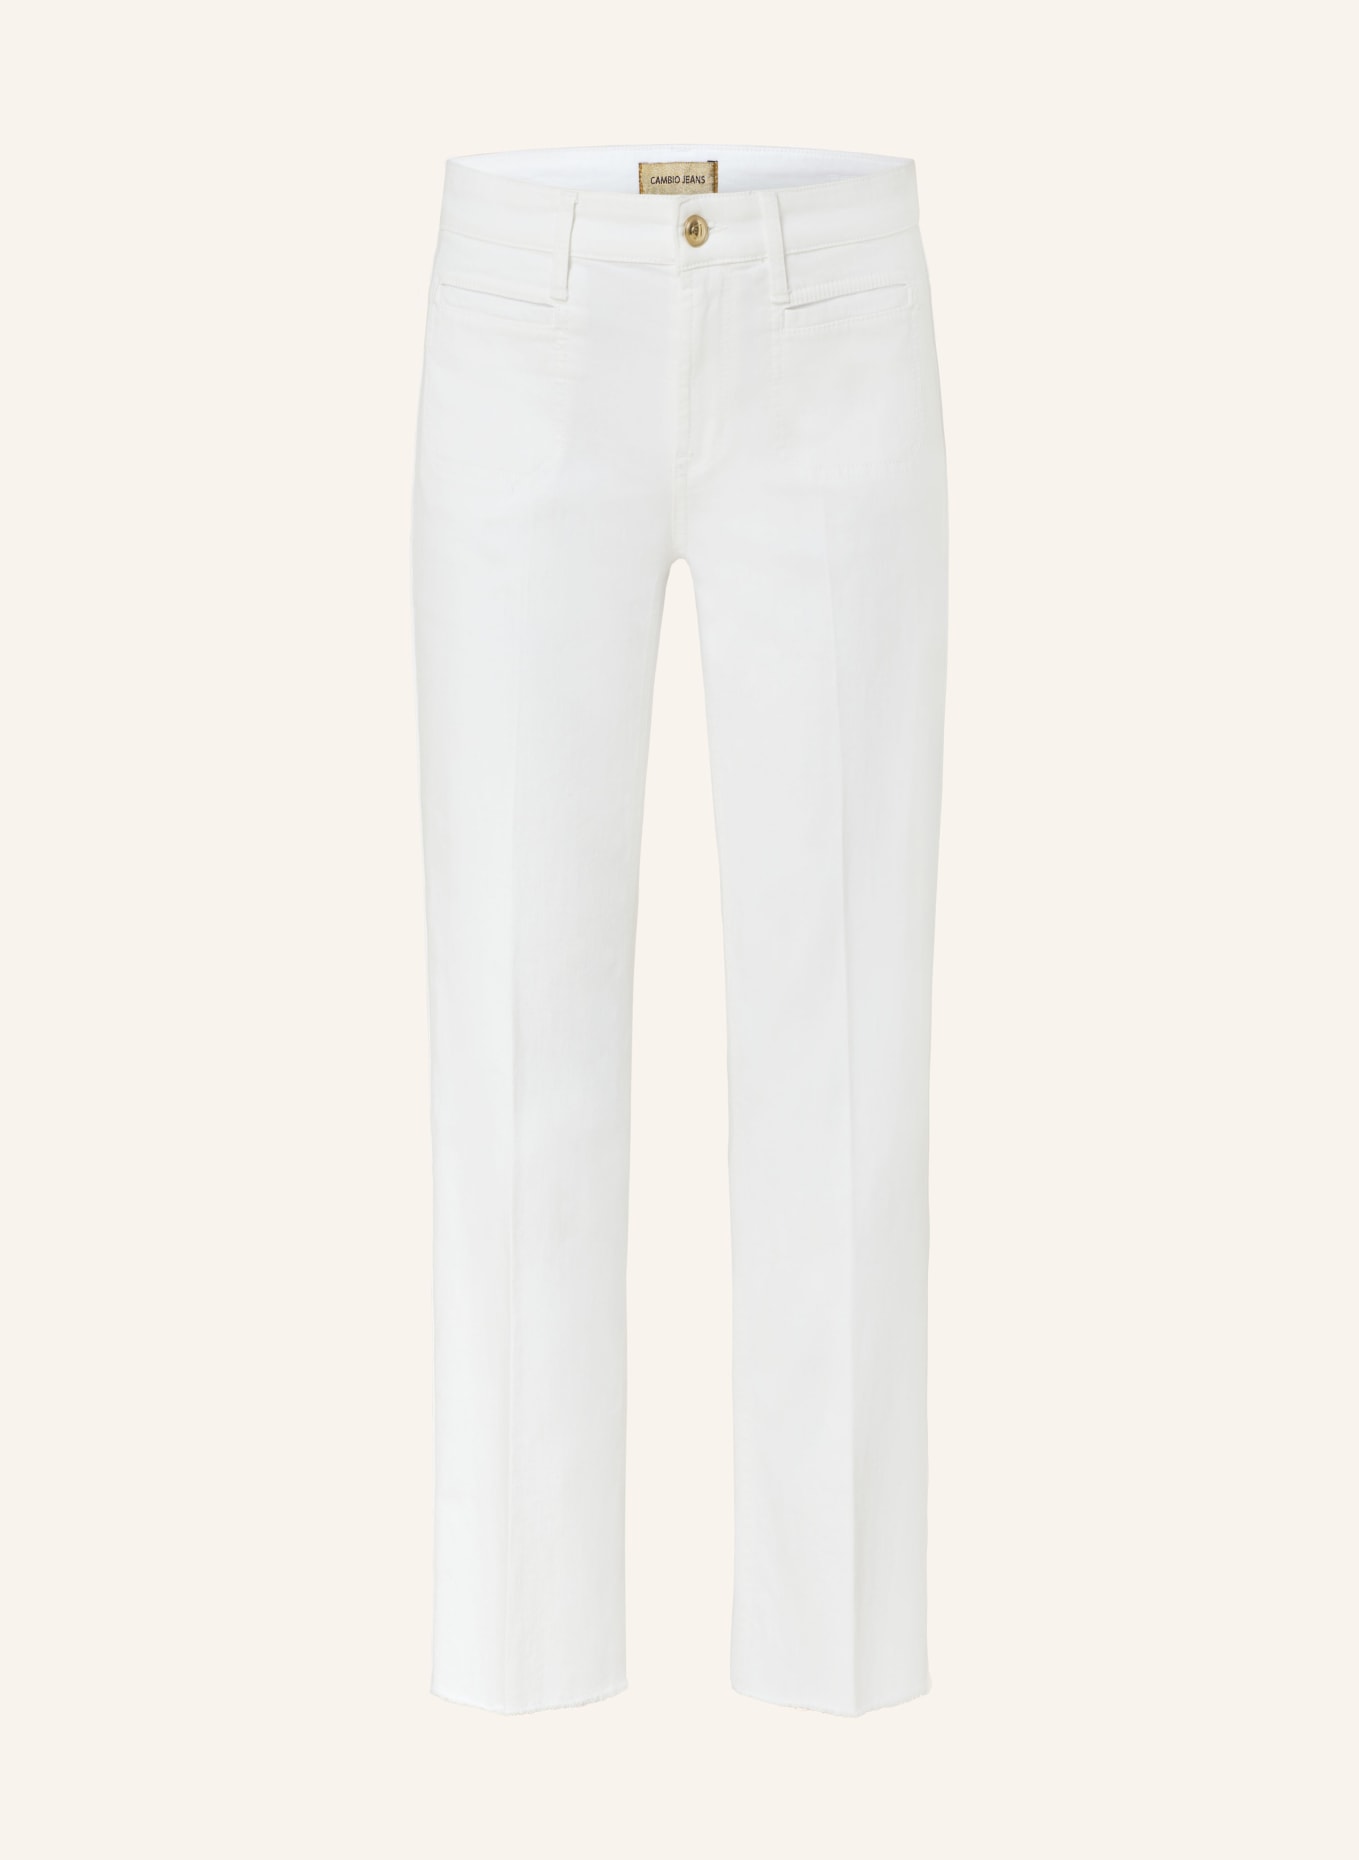 CAMBIO Jeans TESS, Farbe: 5007 classy white & fringed (Bild 1)